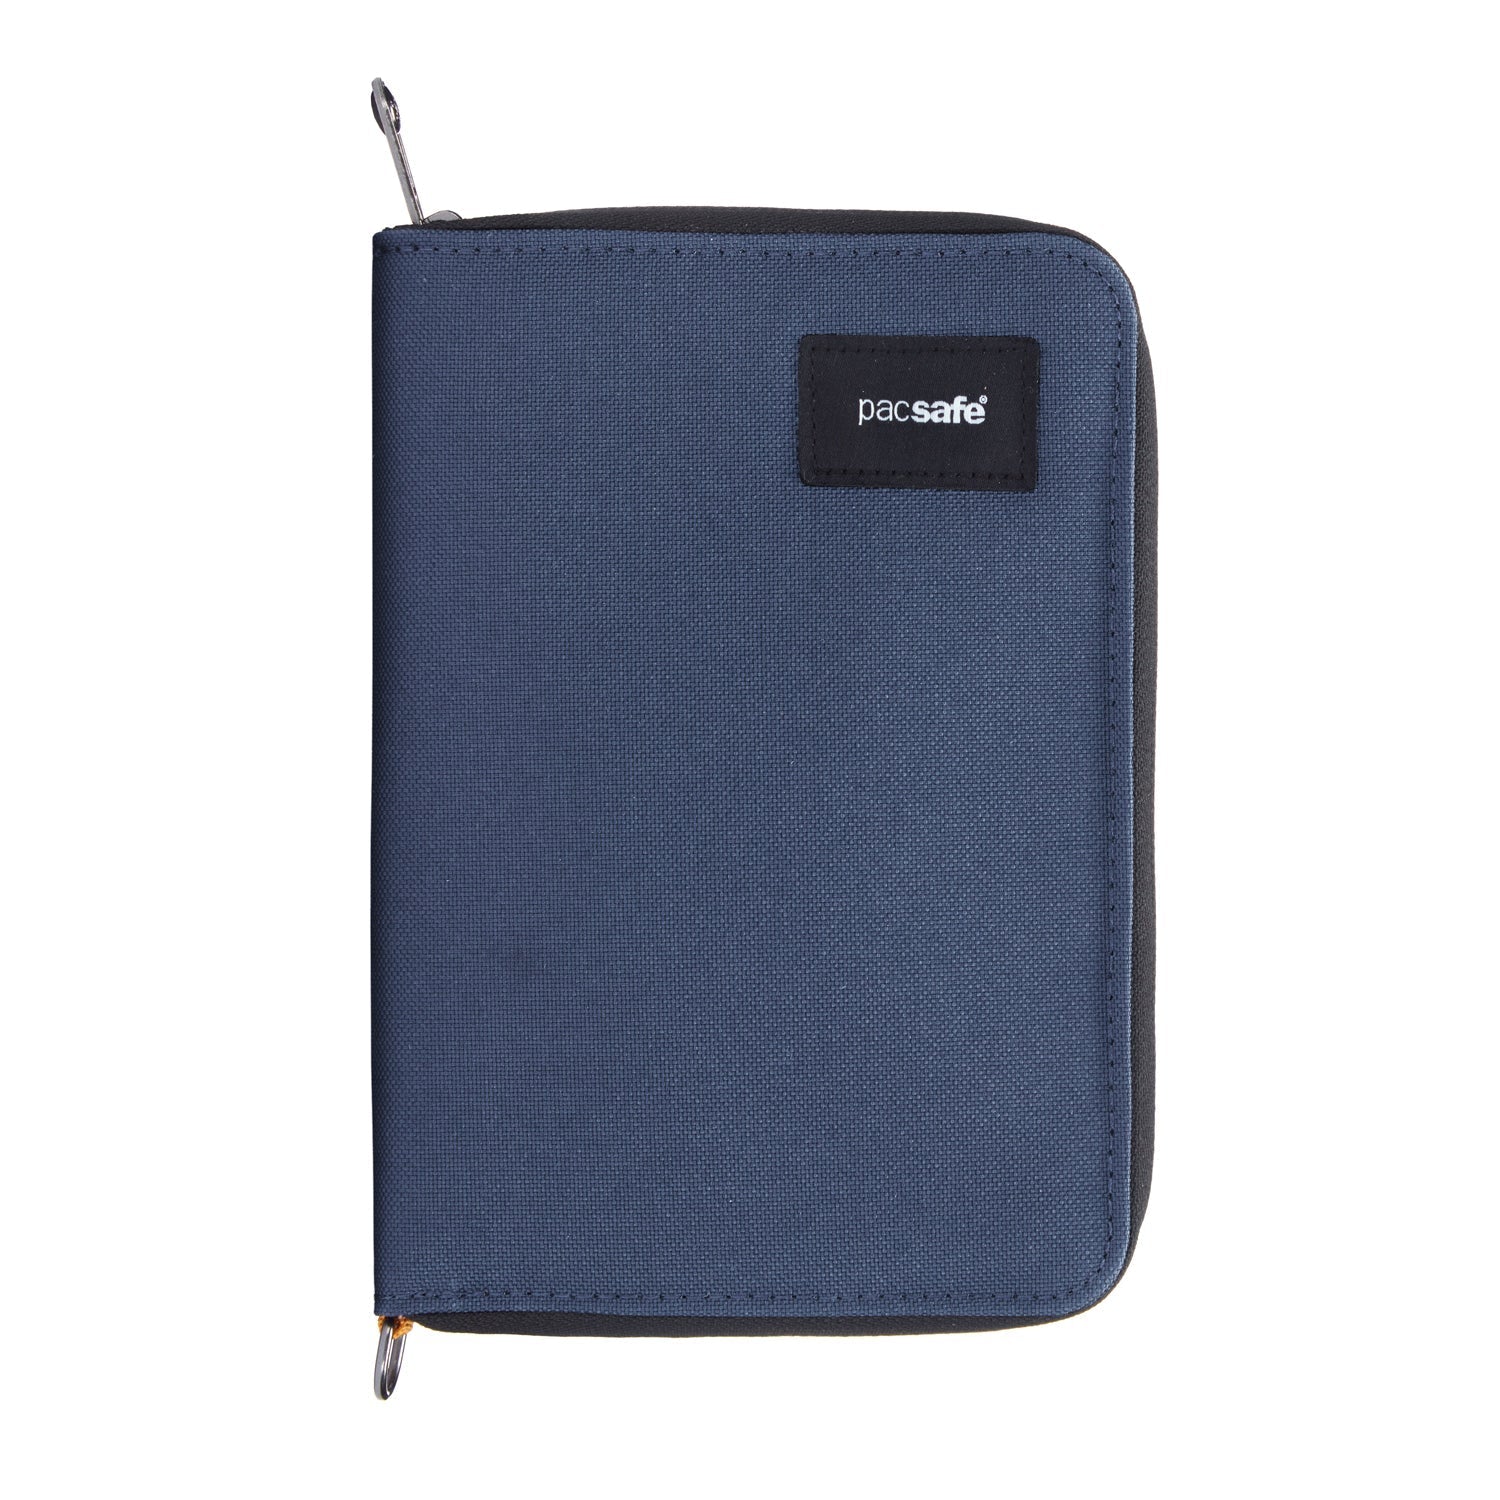 Pacsafe - RFIDsafe Compact Travel Organizer - Coastal Blue